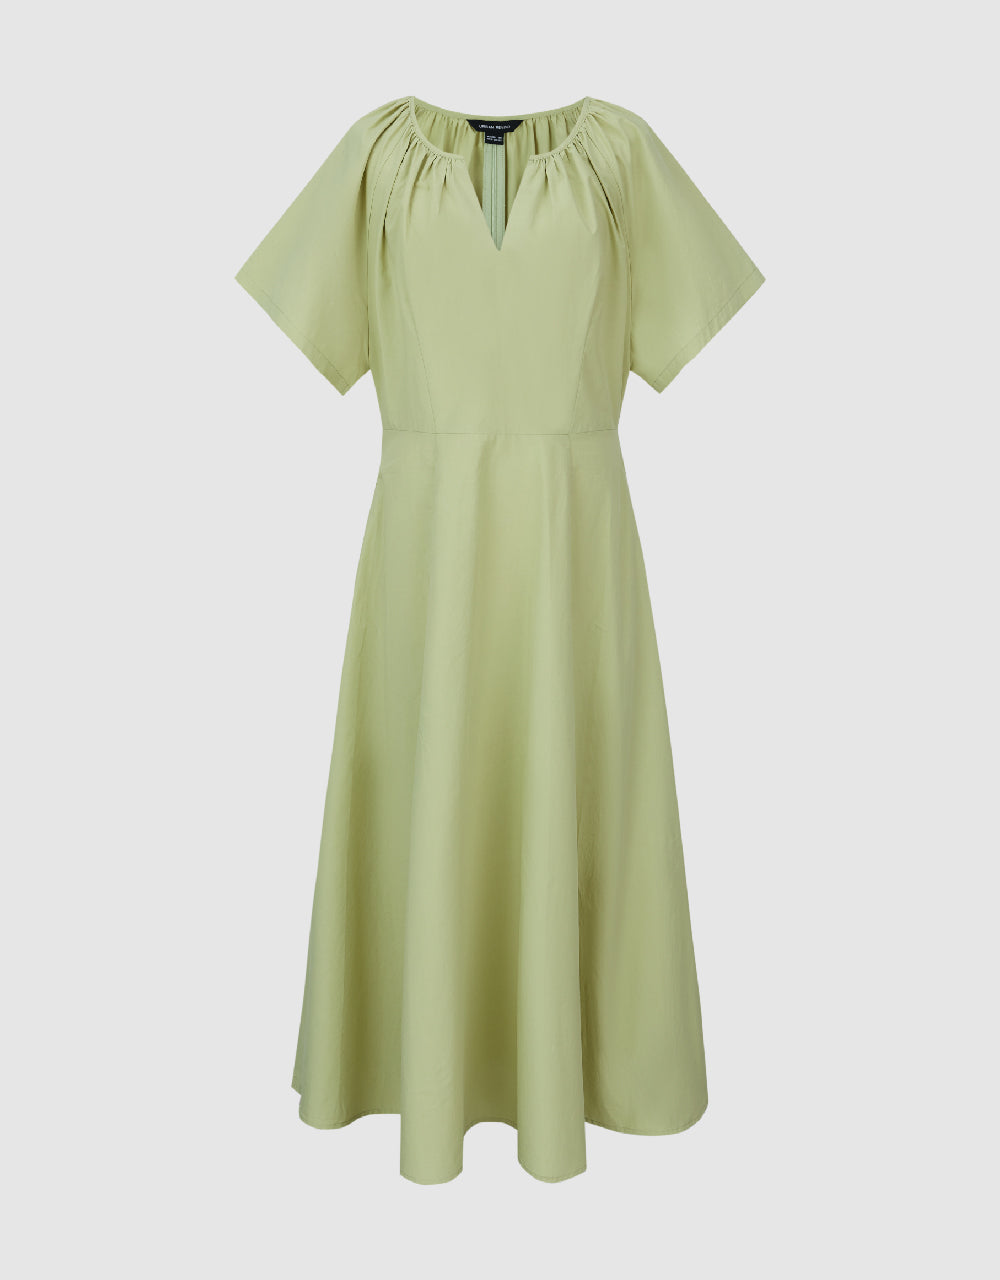 Notch Neck Raglan Sleeve A-Line Dress